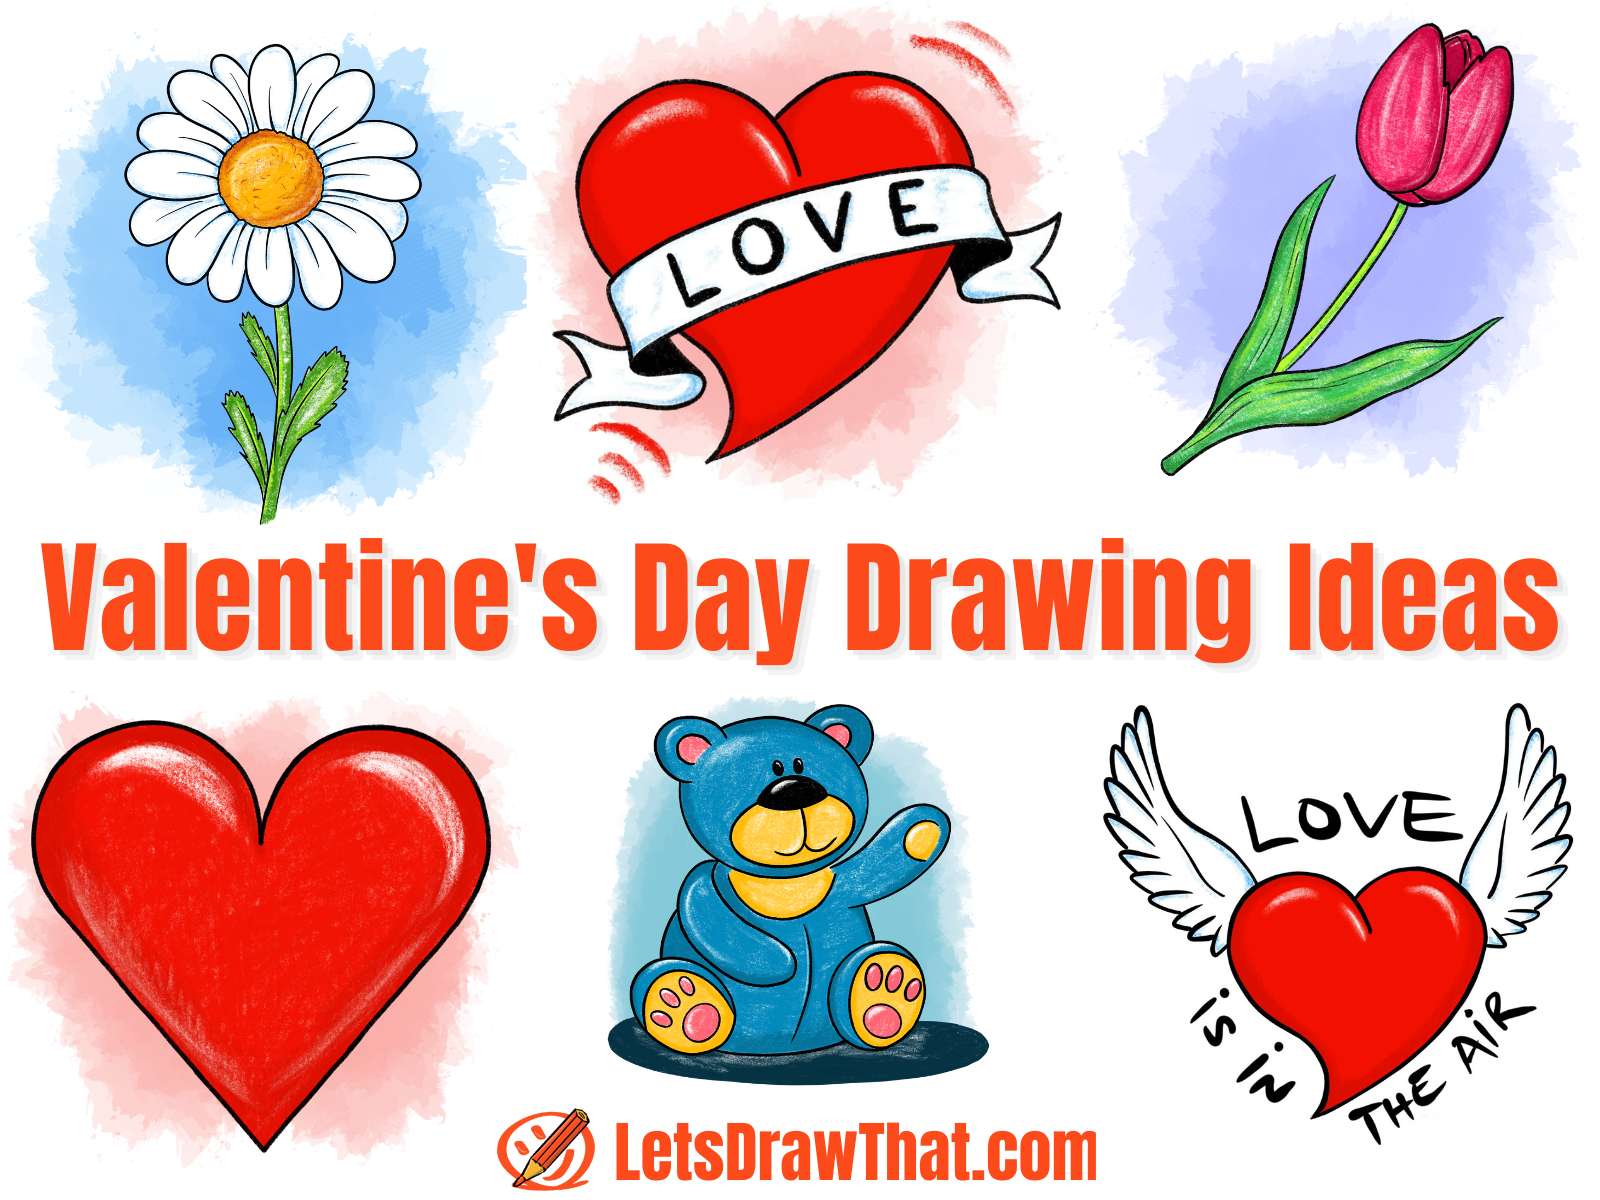 Valentine's day drawing ideas - hearts, flowers, teddy bear